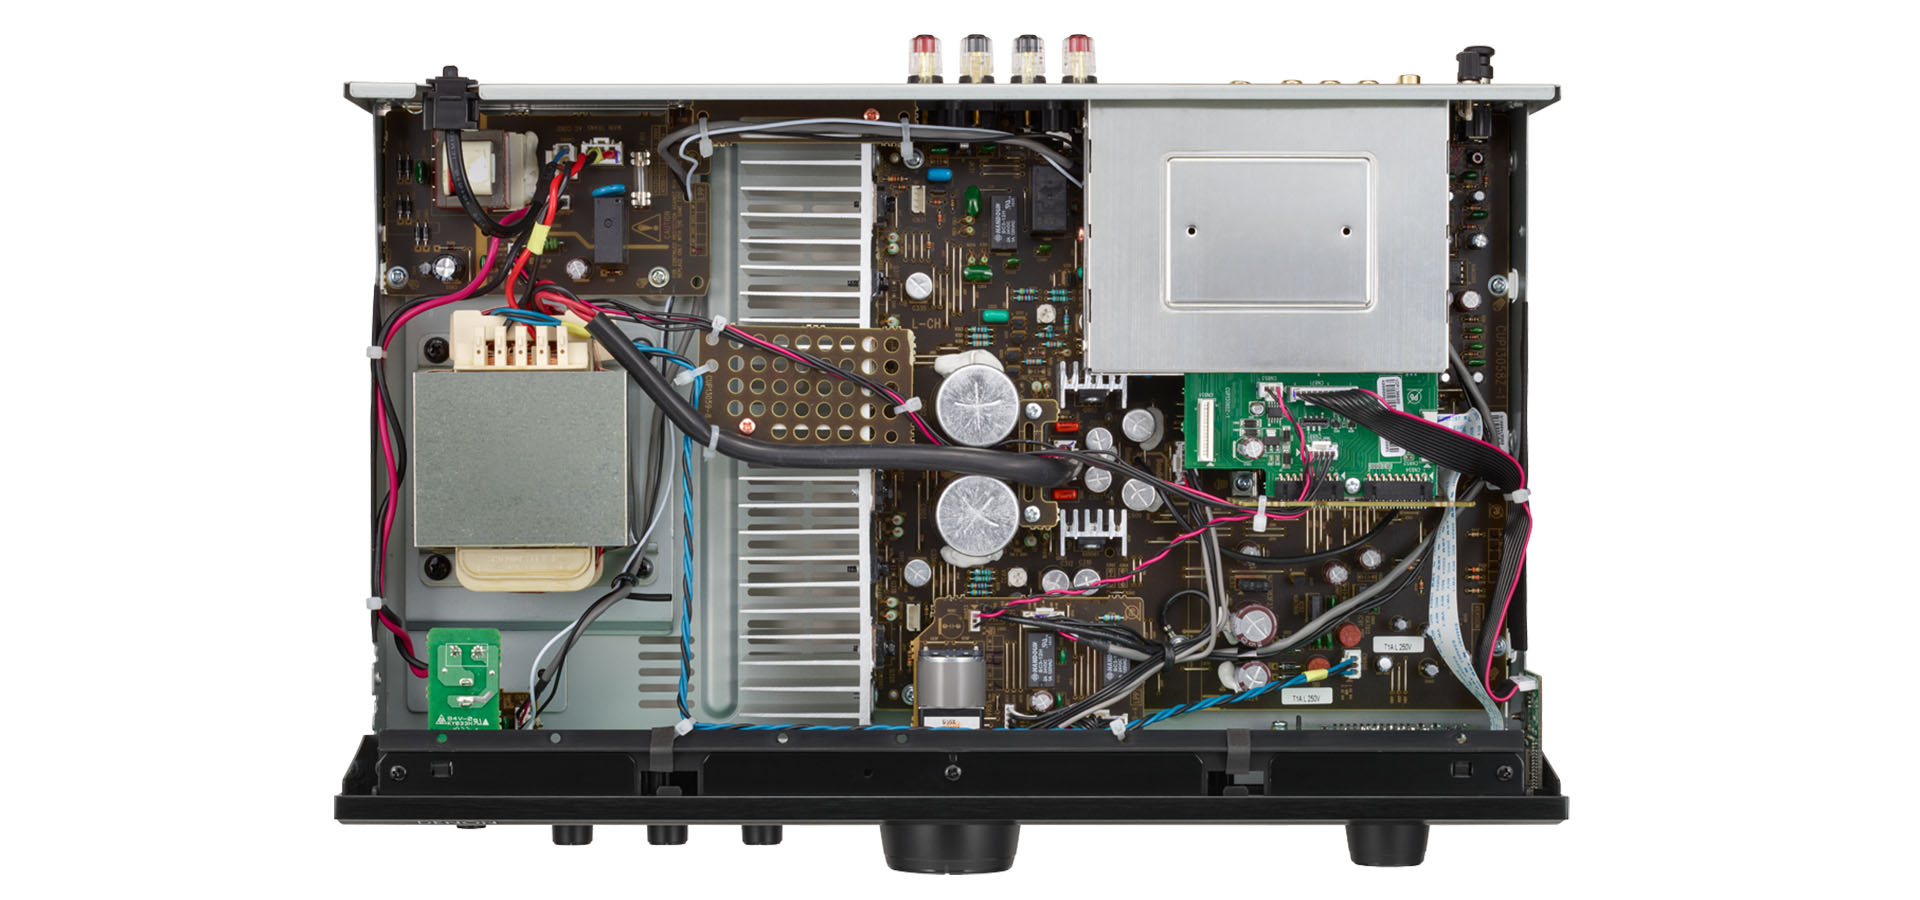 Denon PMA-600NE Integrated Amplifier with 70W/channel